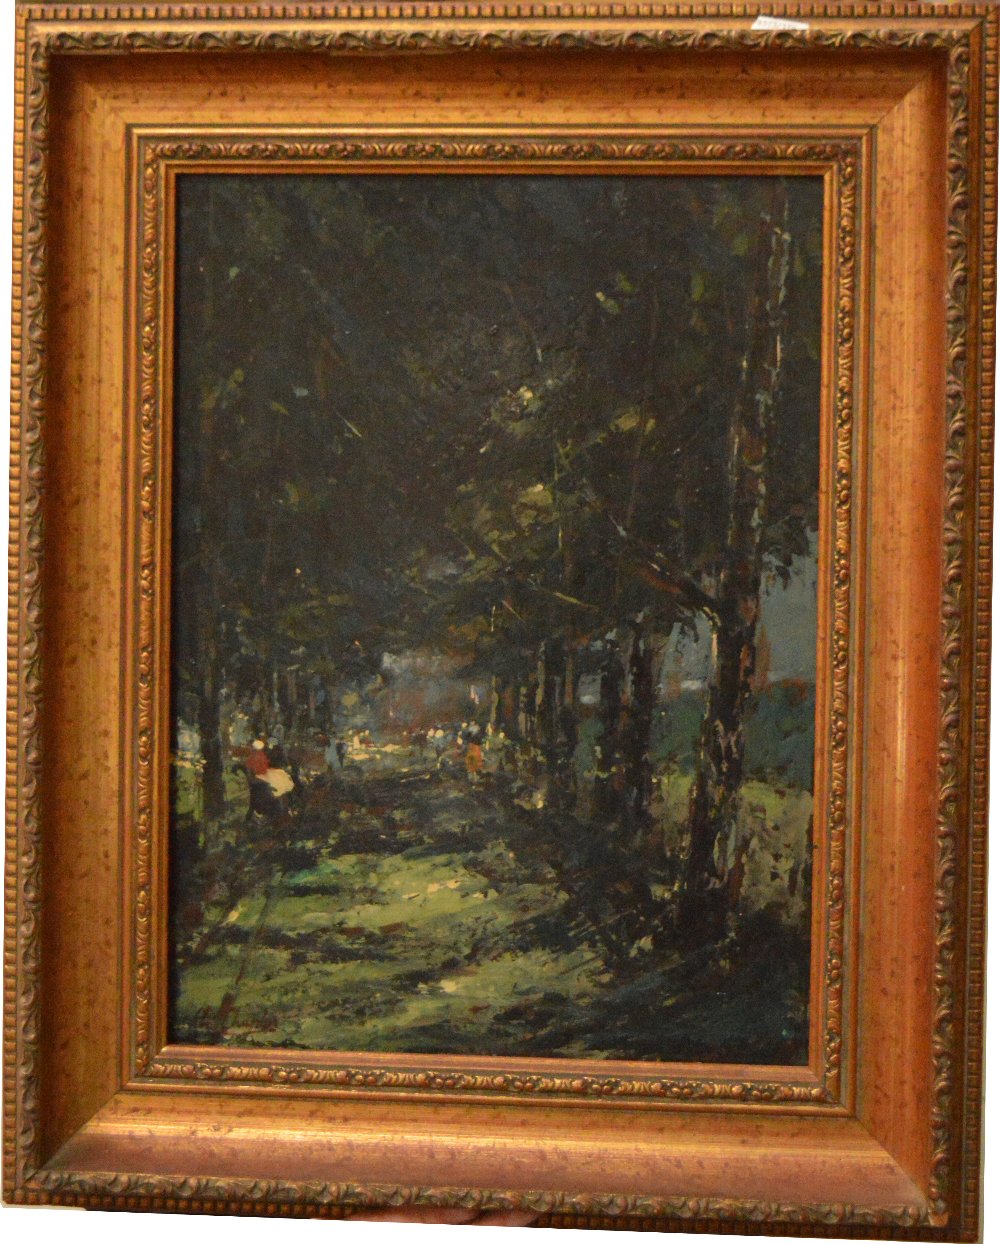 C. H. CHAPLIN; oil on board, a Parisian tree lined boulevard with figures, 39 x 29cm, framed.